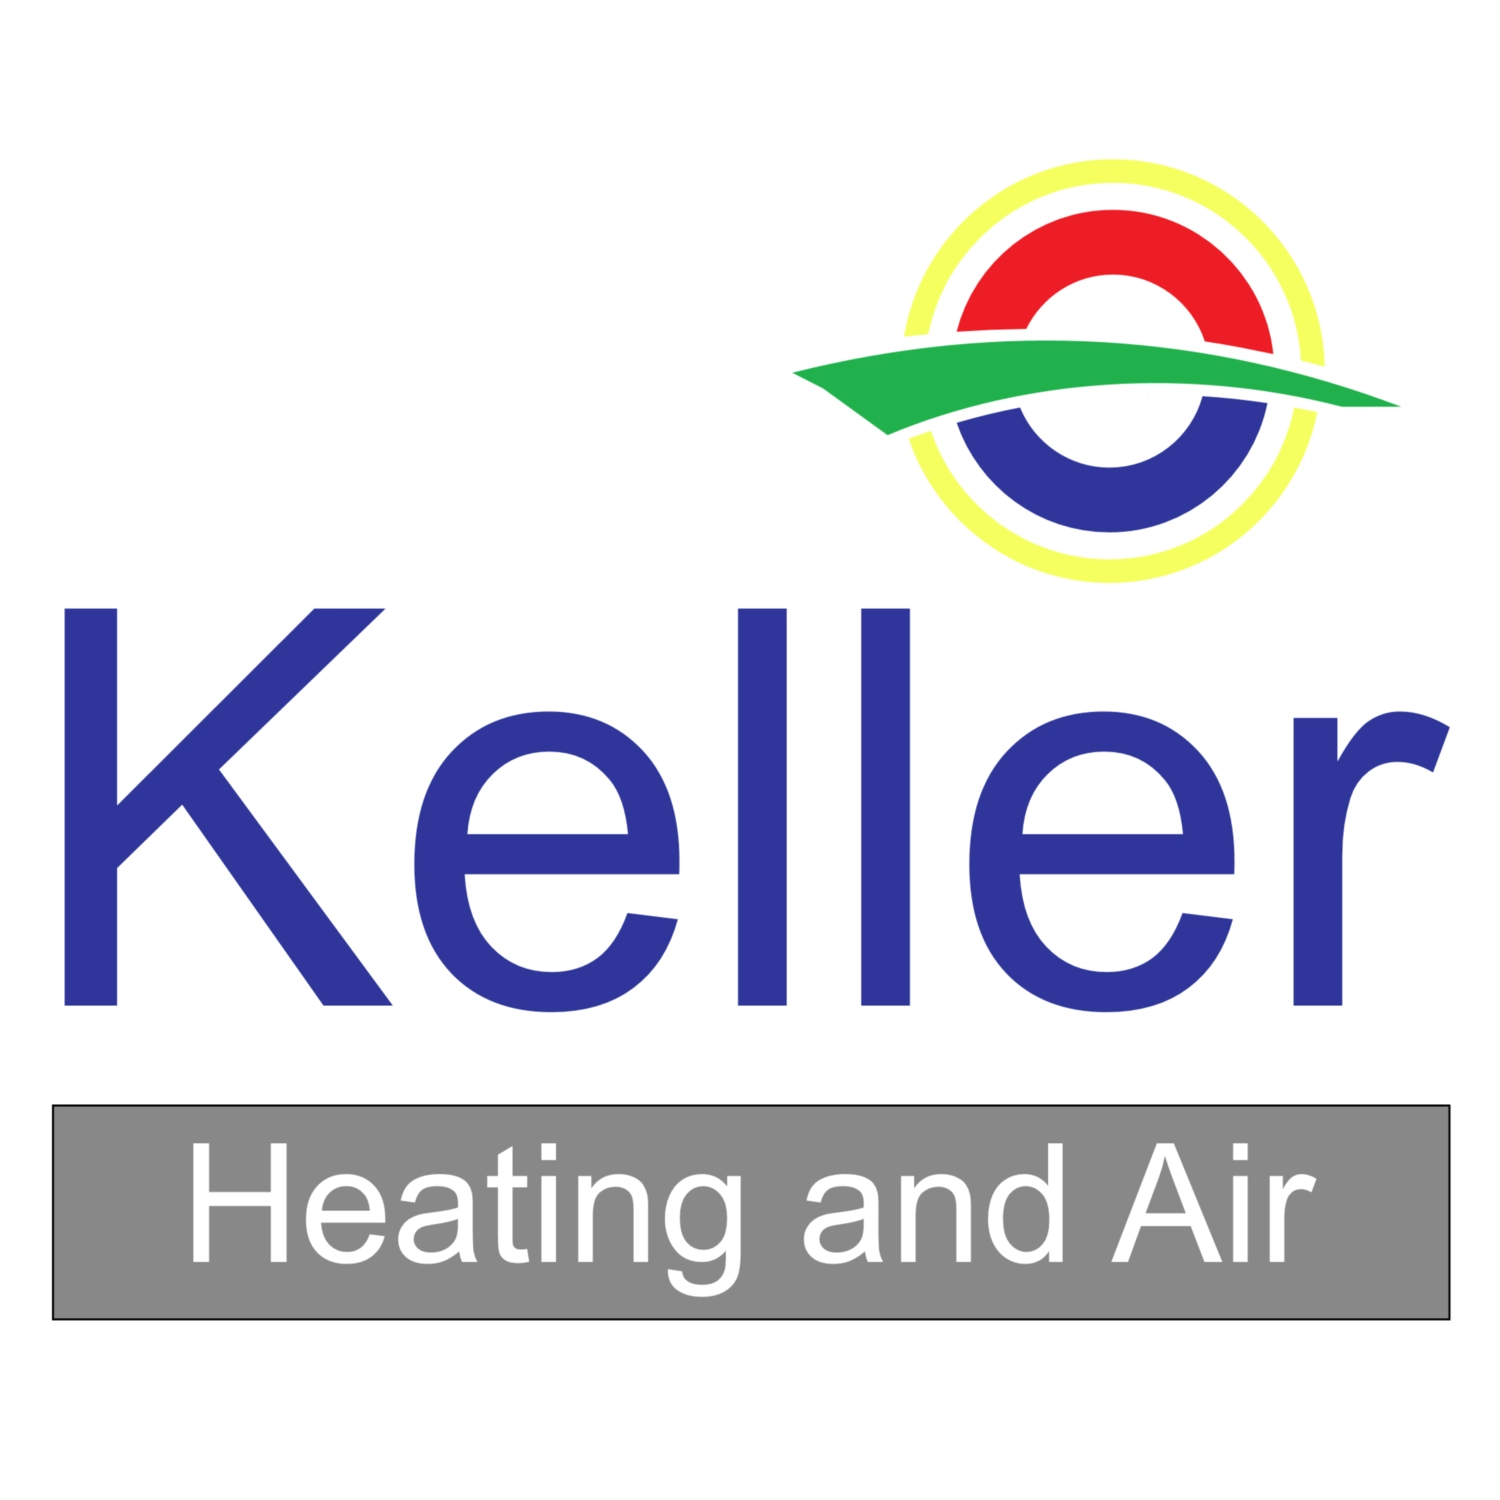 Keller Heating and Air Logo